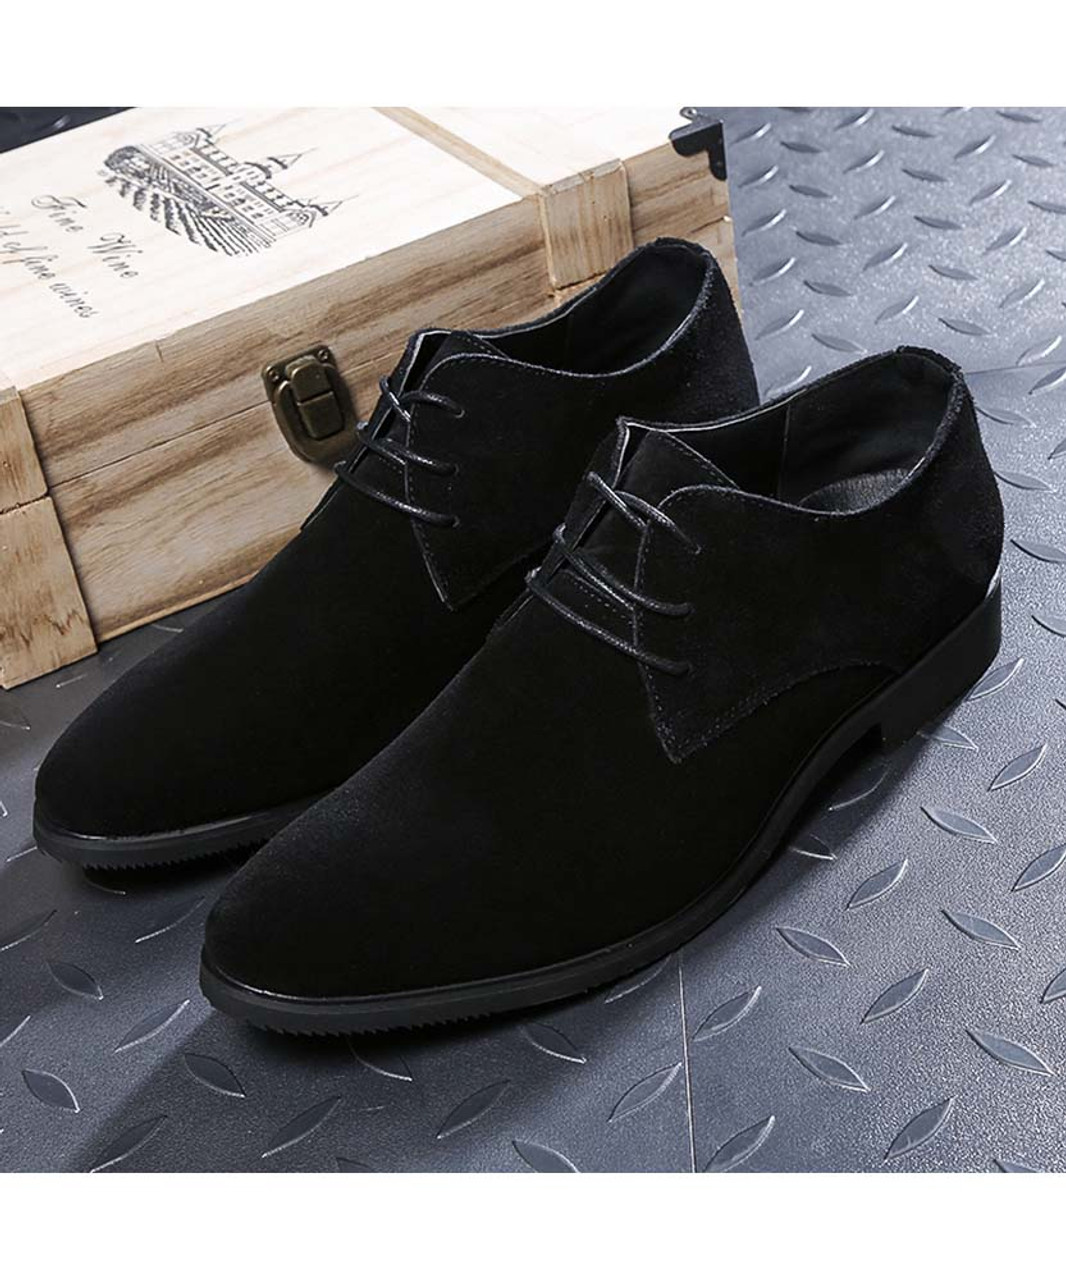 Black suede leather derby dress shoe curved toe | Mens dress shoes ...